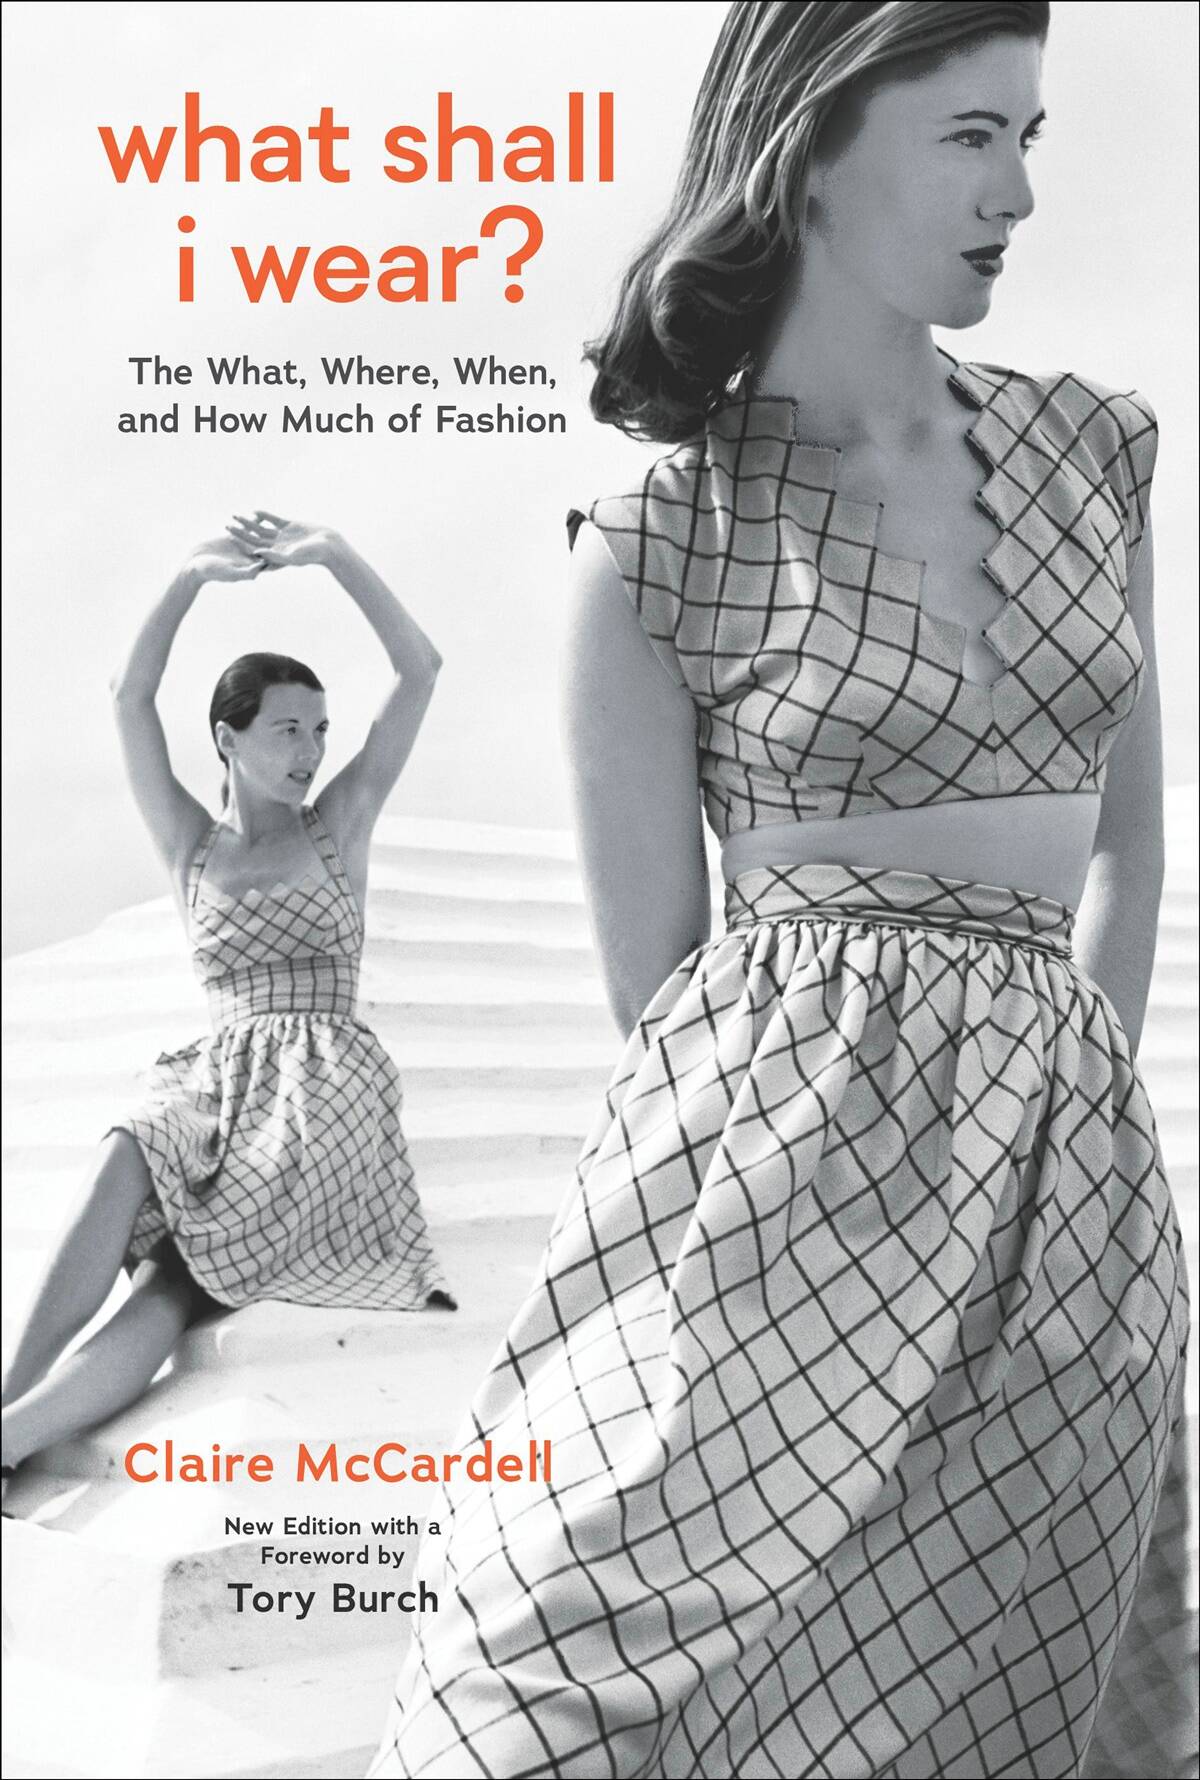 Claire McCardell’s book, fashion